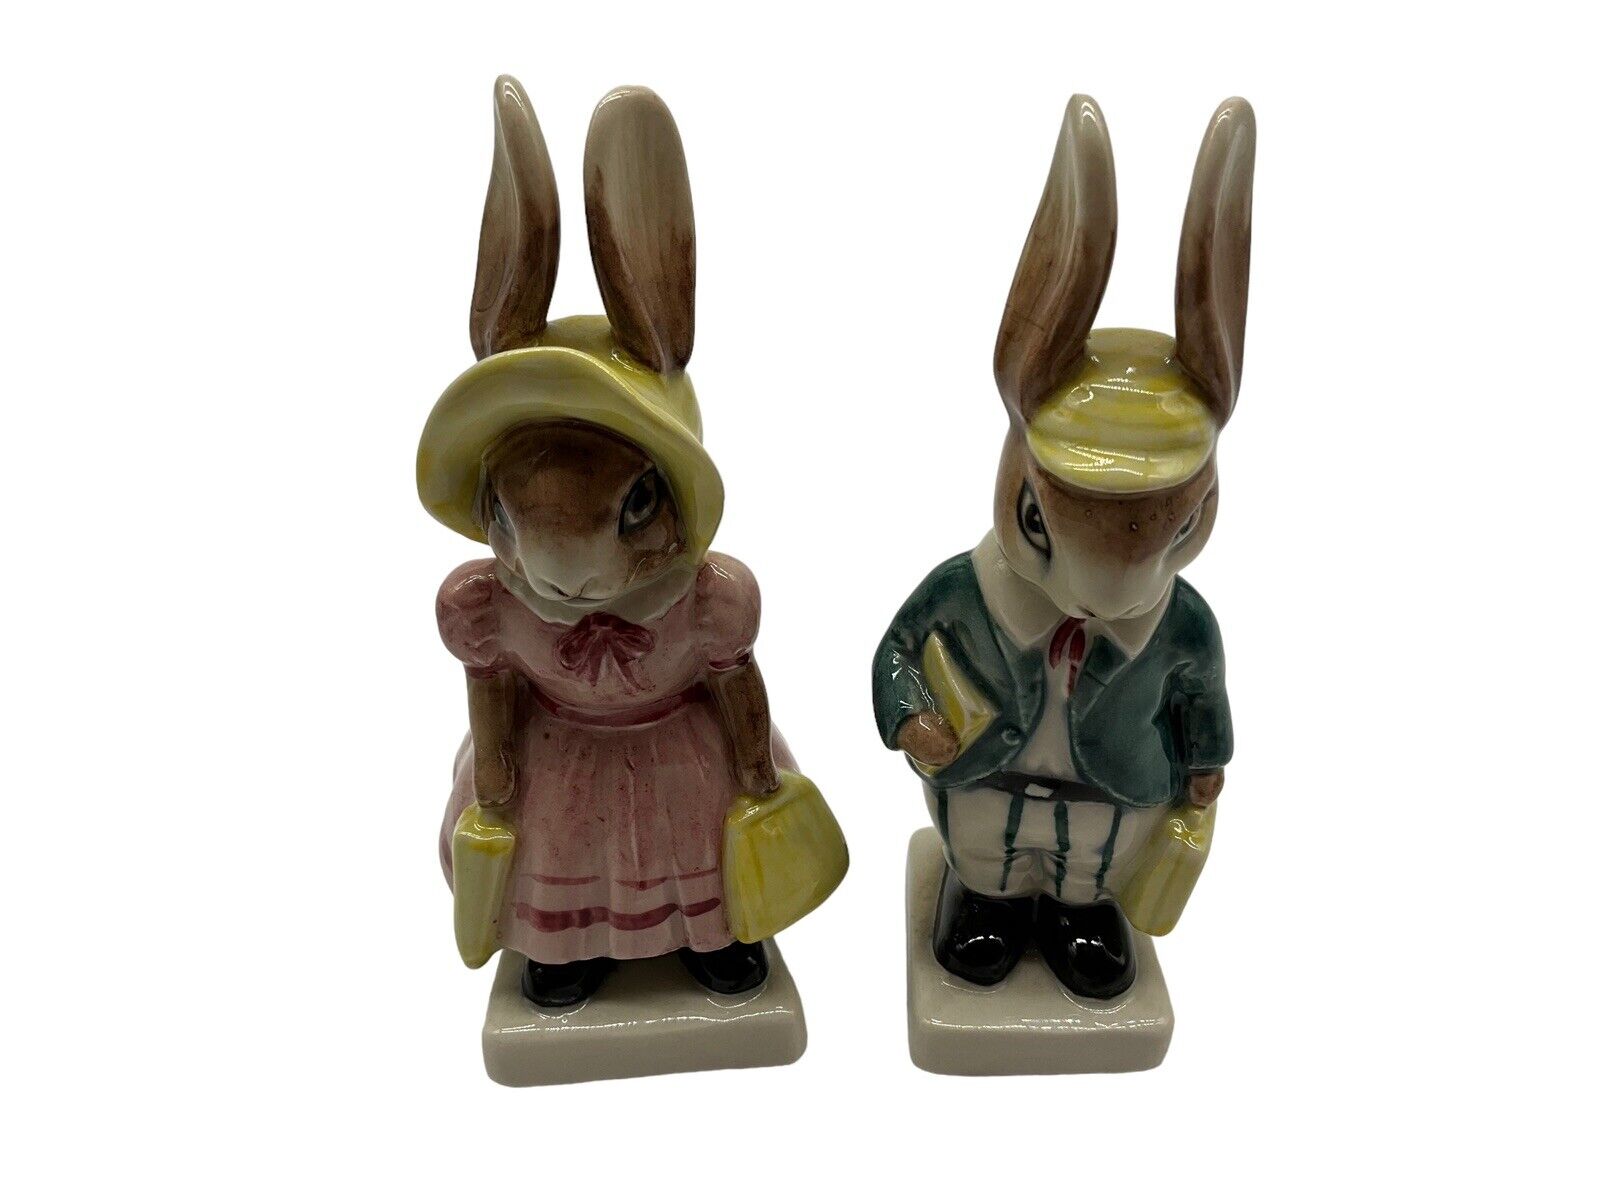 Bunny Rabbit School Boy and Girl Figurines from Artone, England Collectible MCM